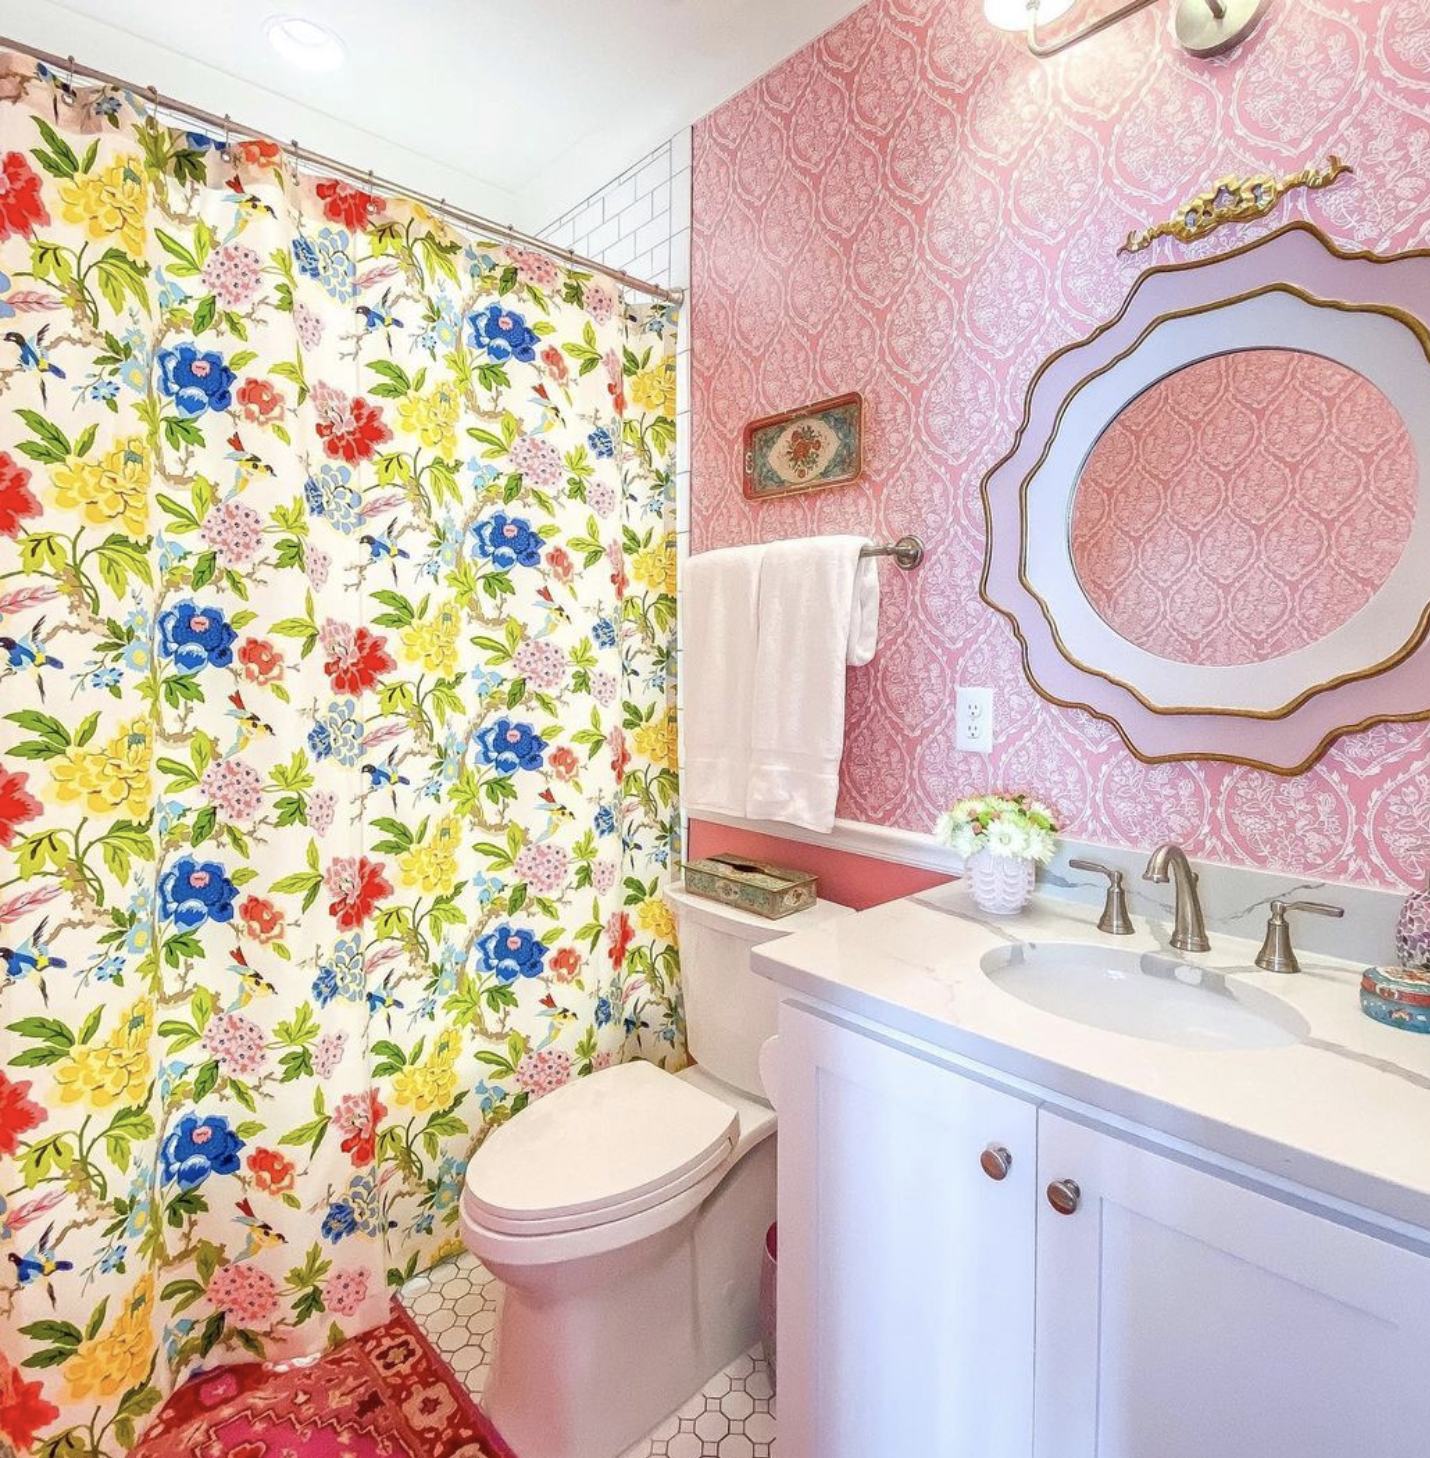 Pink bathroom with floral shower curtain - so much fun! kellyelko.com